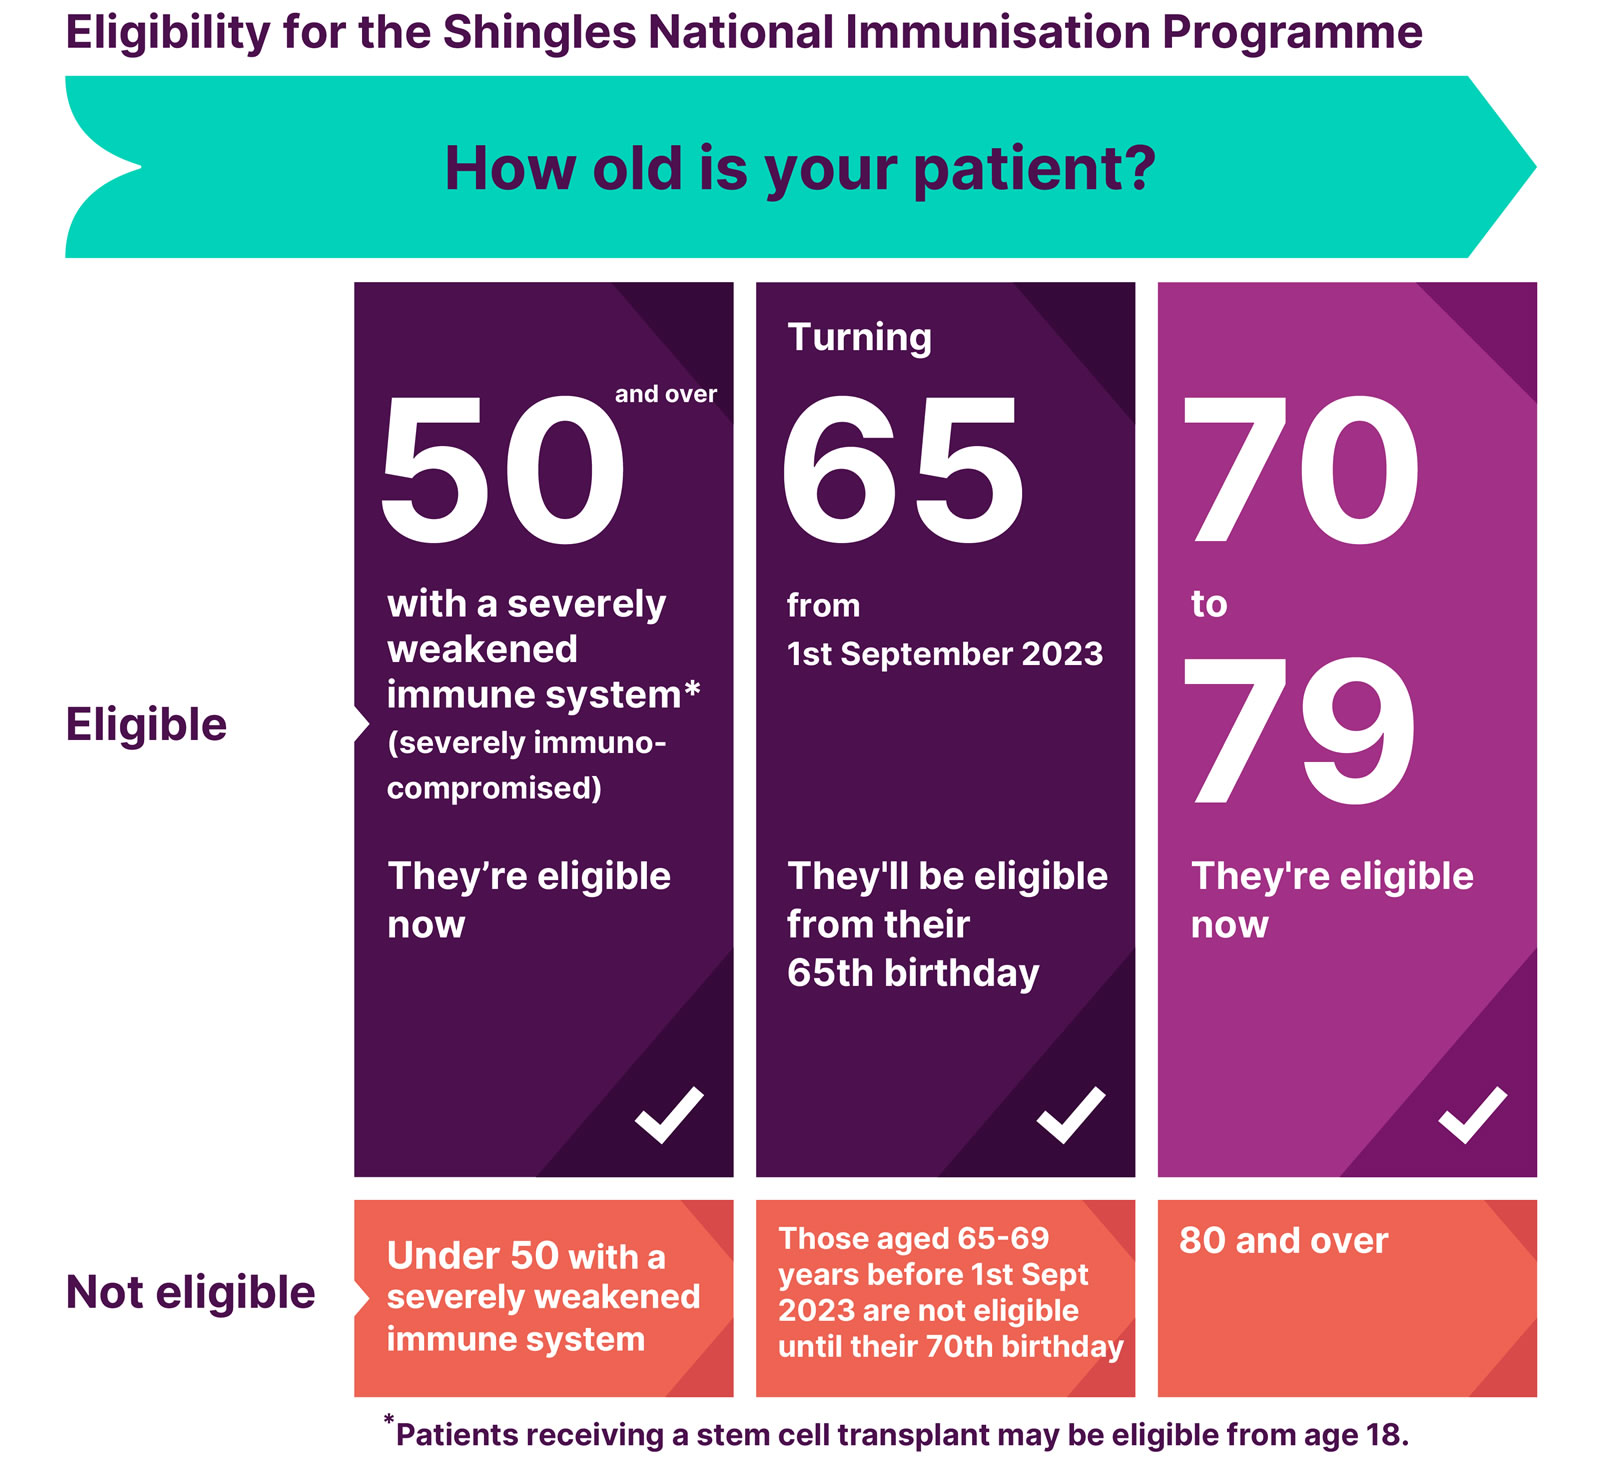 Eligibility for the Shingles National Immunisation Programme